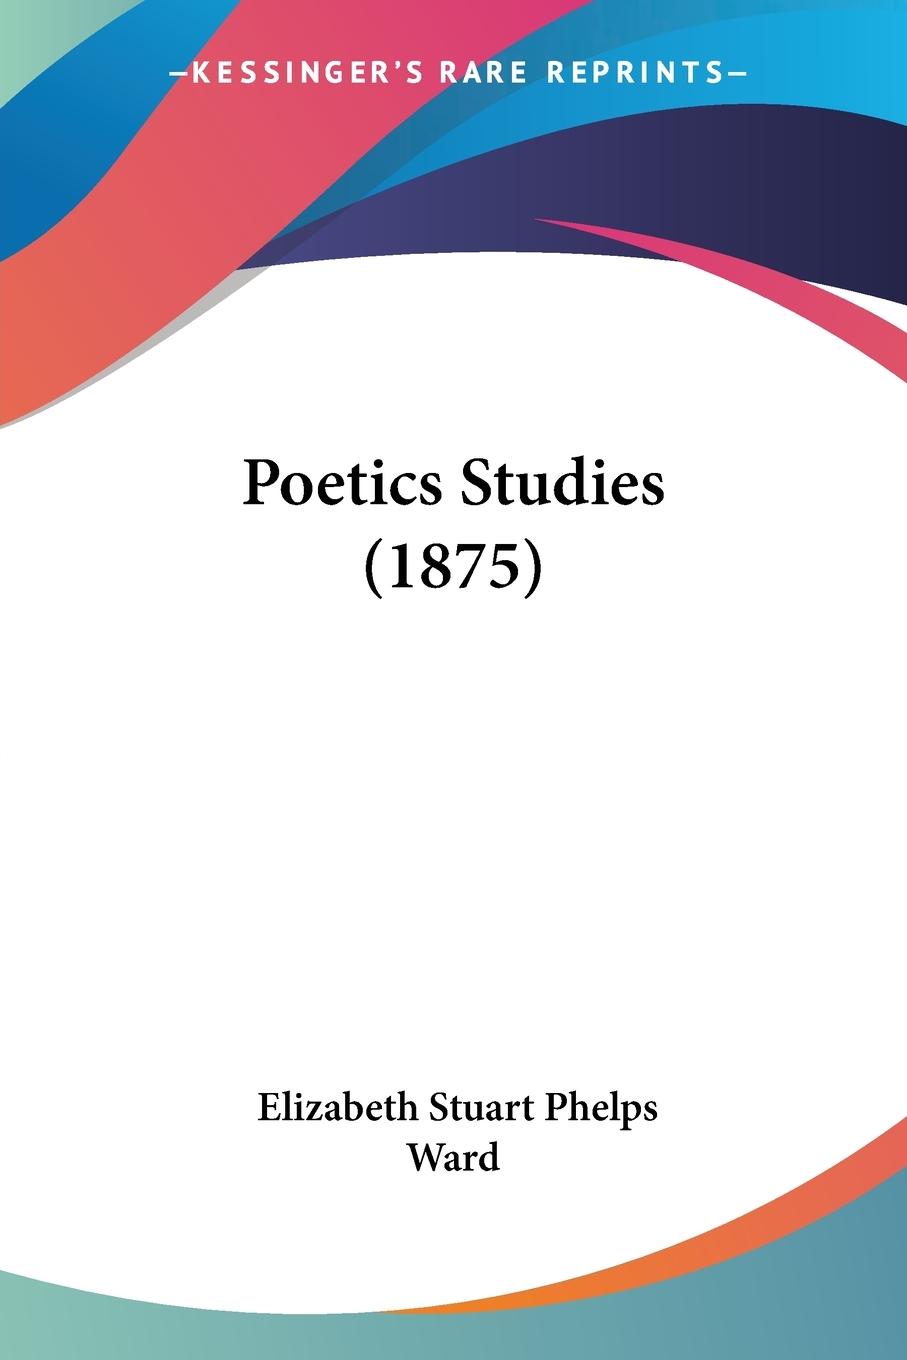 Poetics Studies (1875) - Ward, Elizabeth Stuart Phelps